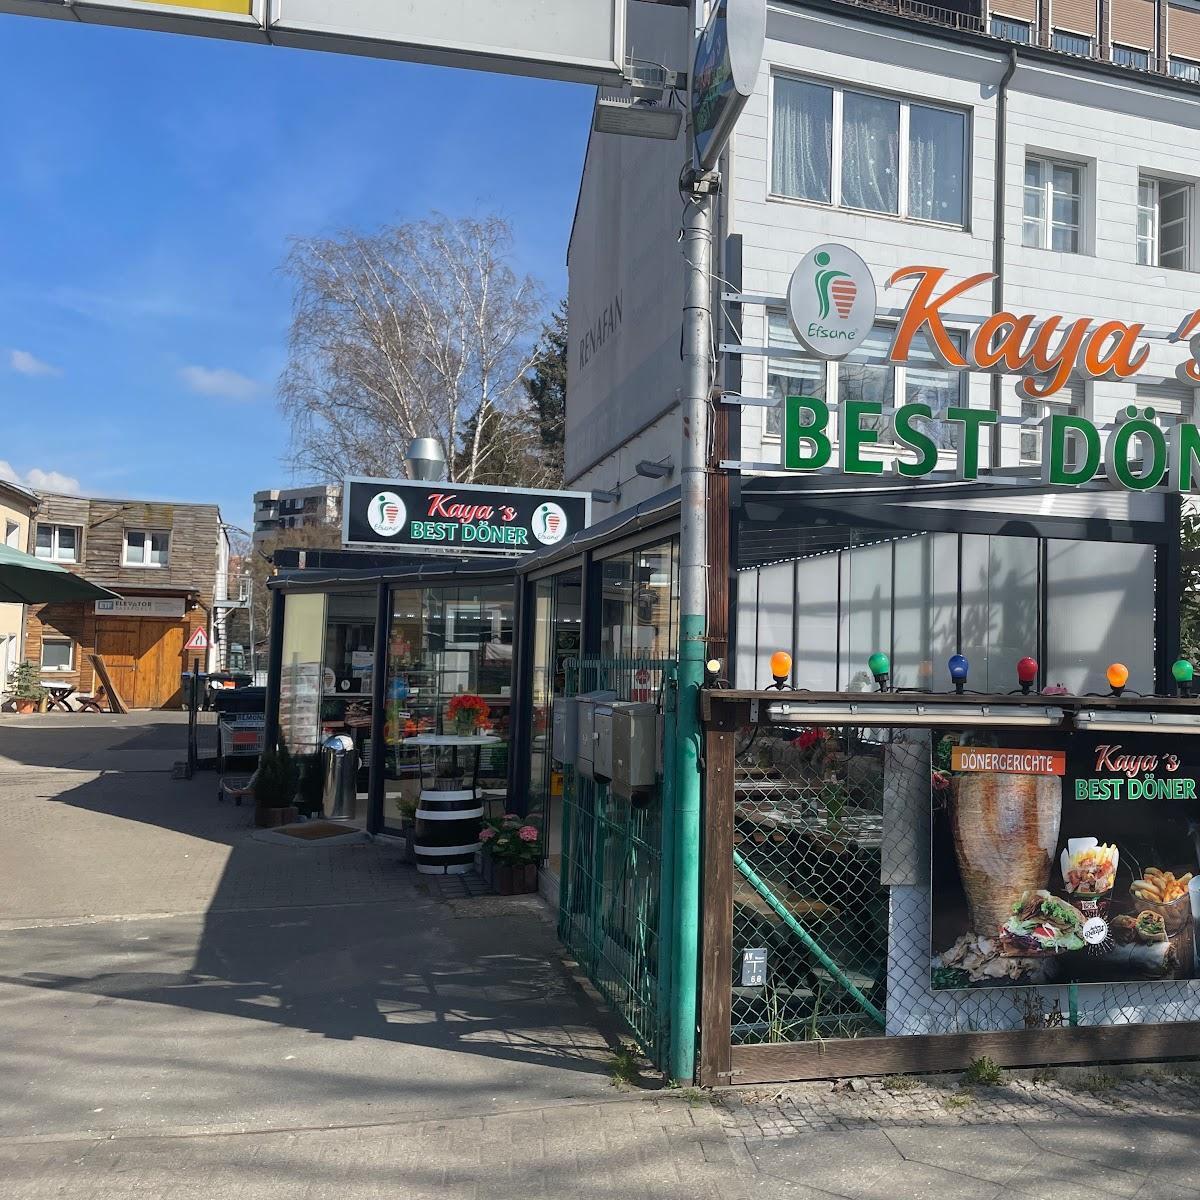 Restaurant "Kaya‘s Best Döner" in Berlin